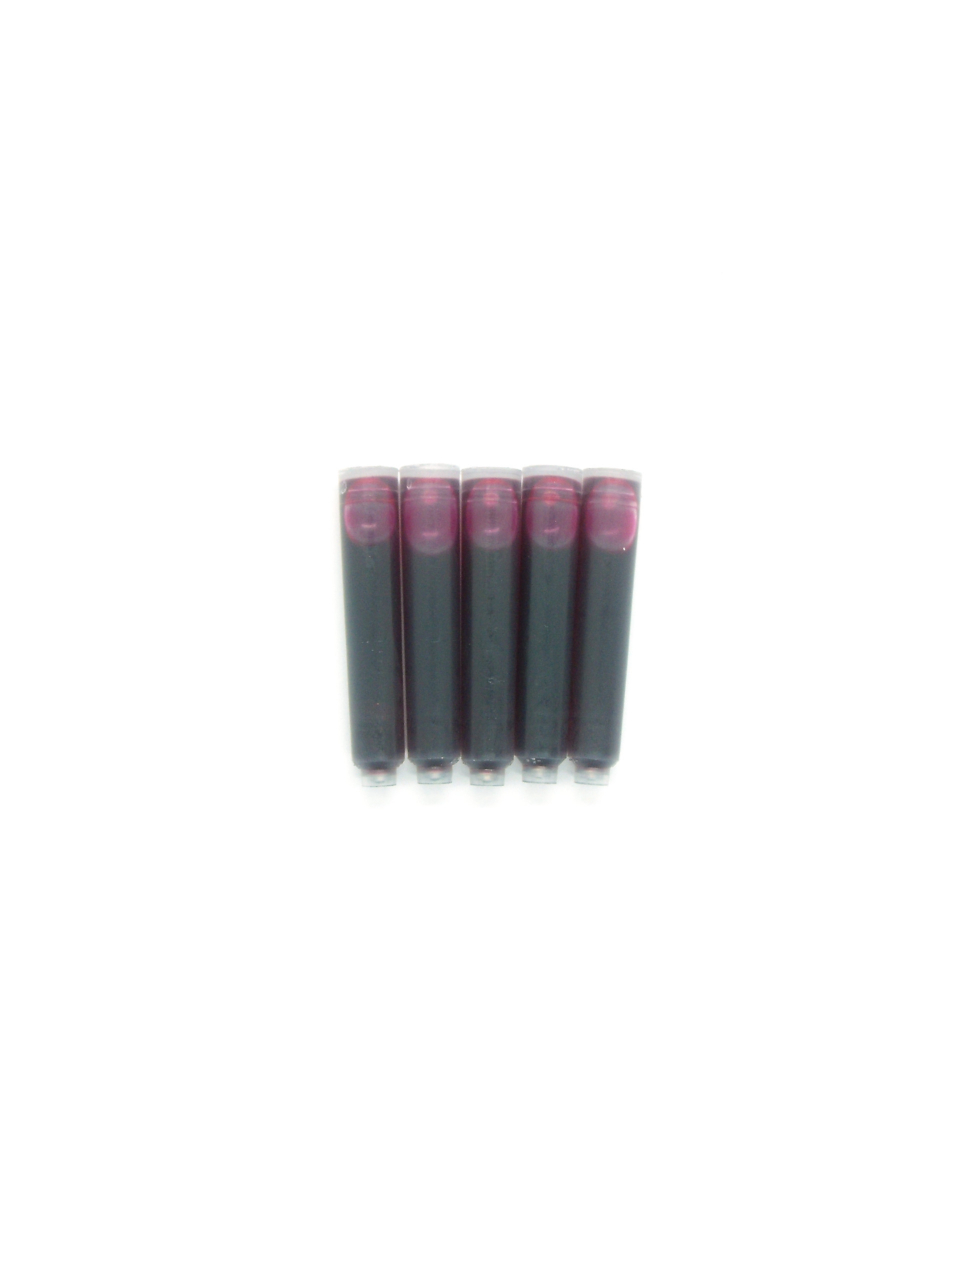 PenConverter Ink Cartridges For Wahl-Eversharp Fountain Pens (Pink)